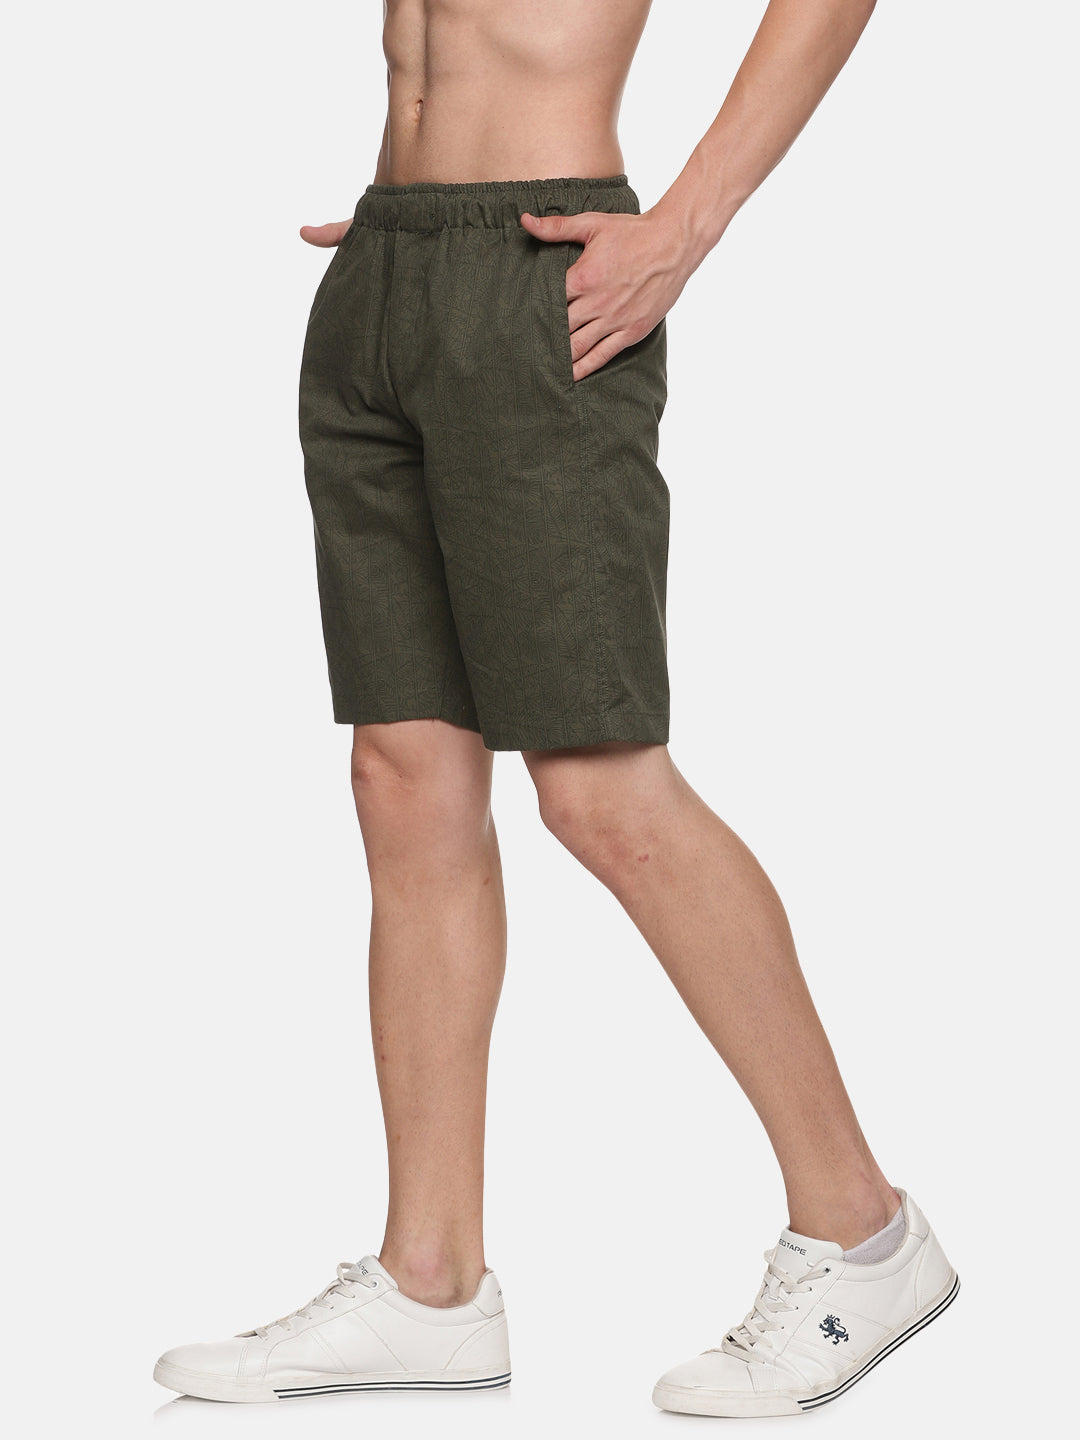 Junglee Men's Printed Shorts